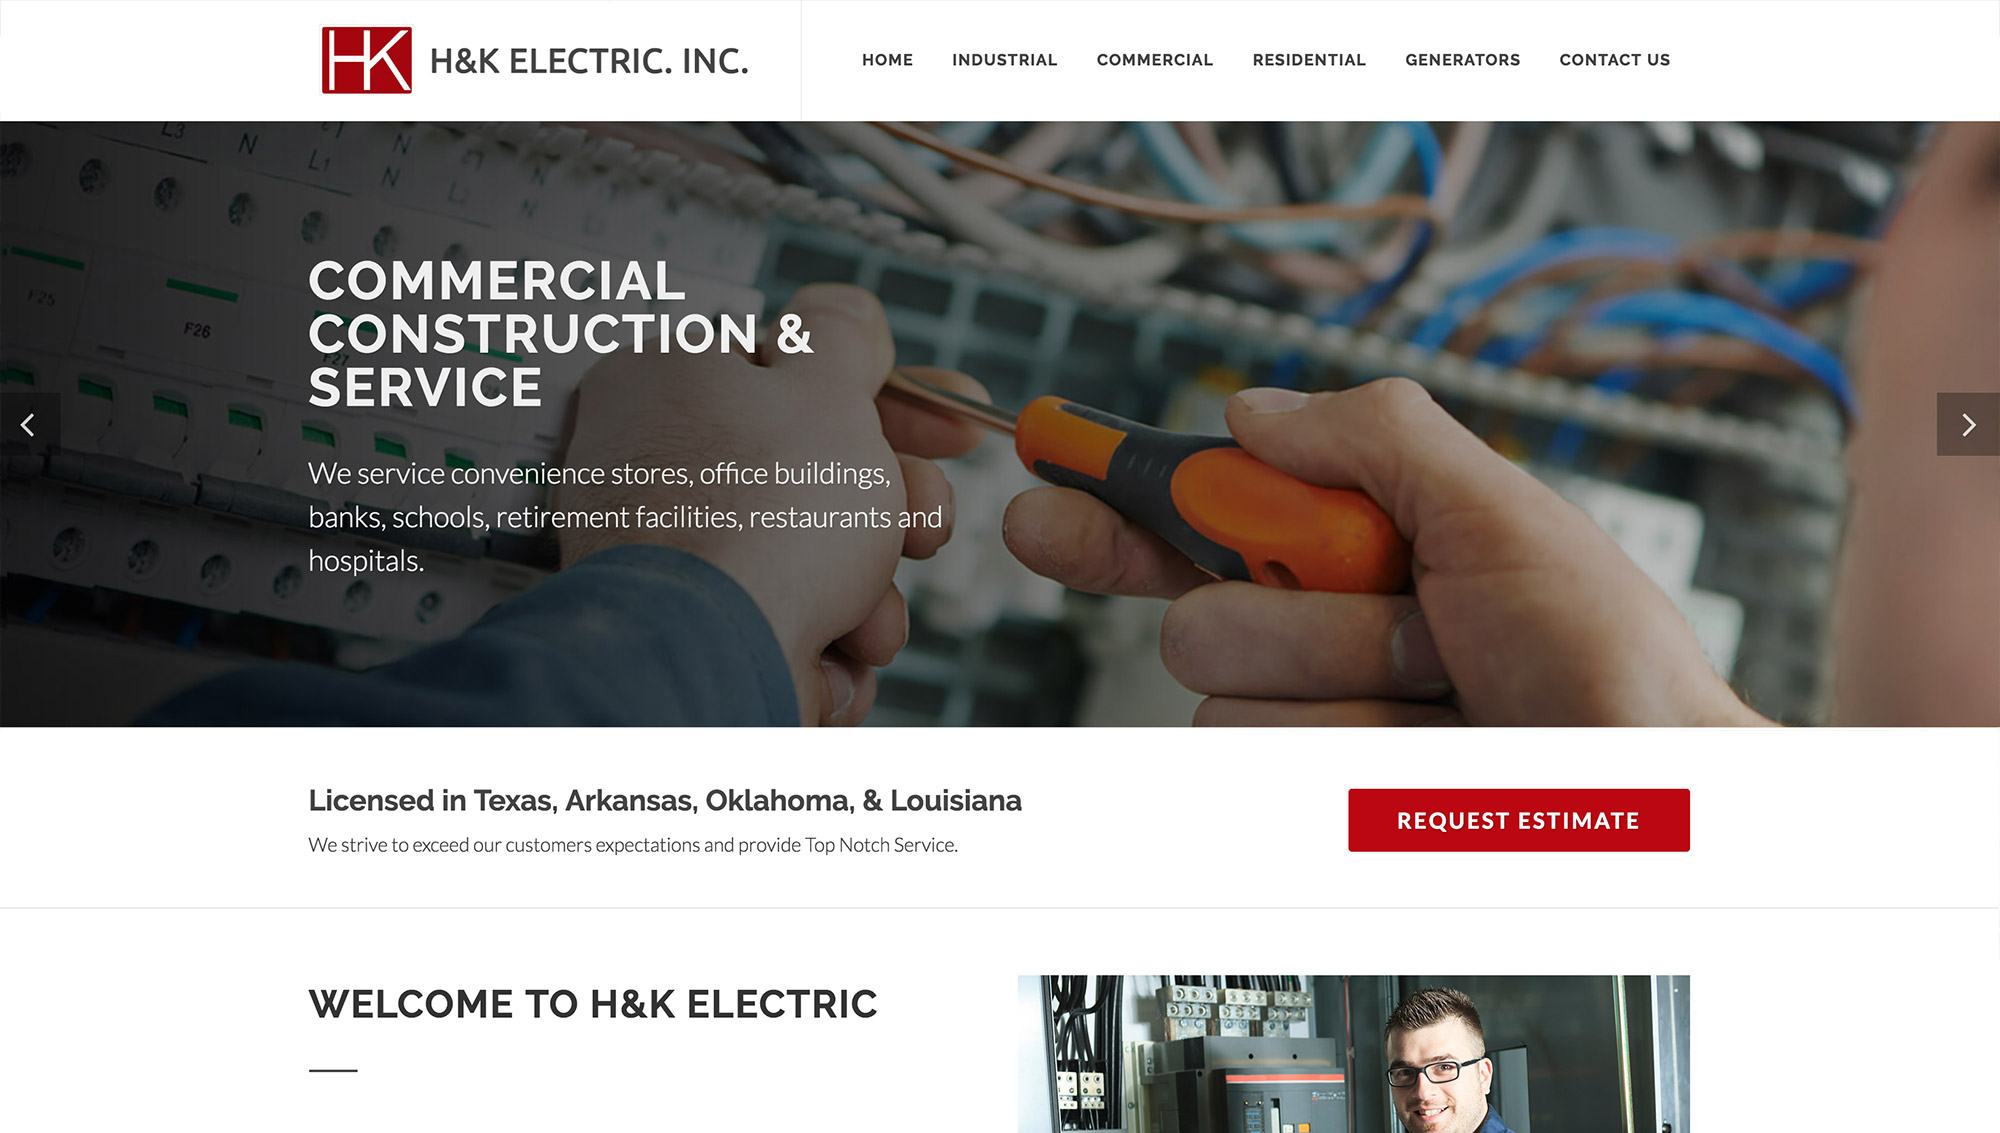 H&K Electric. INC